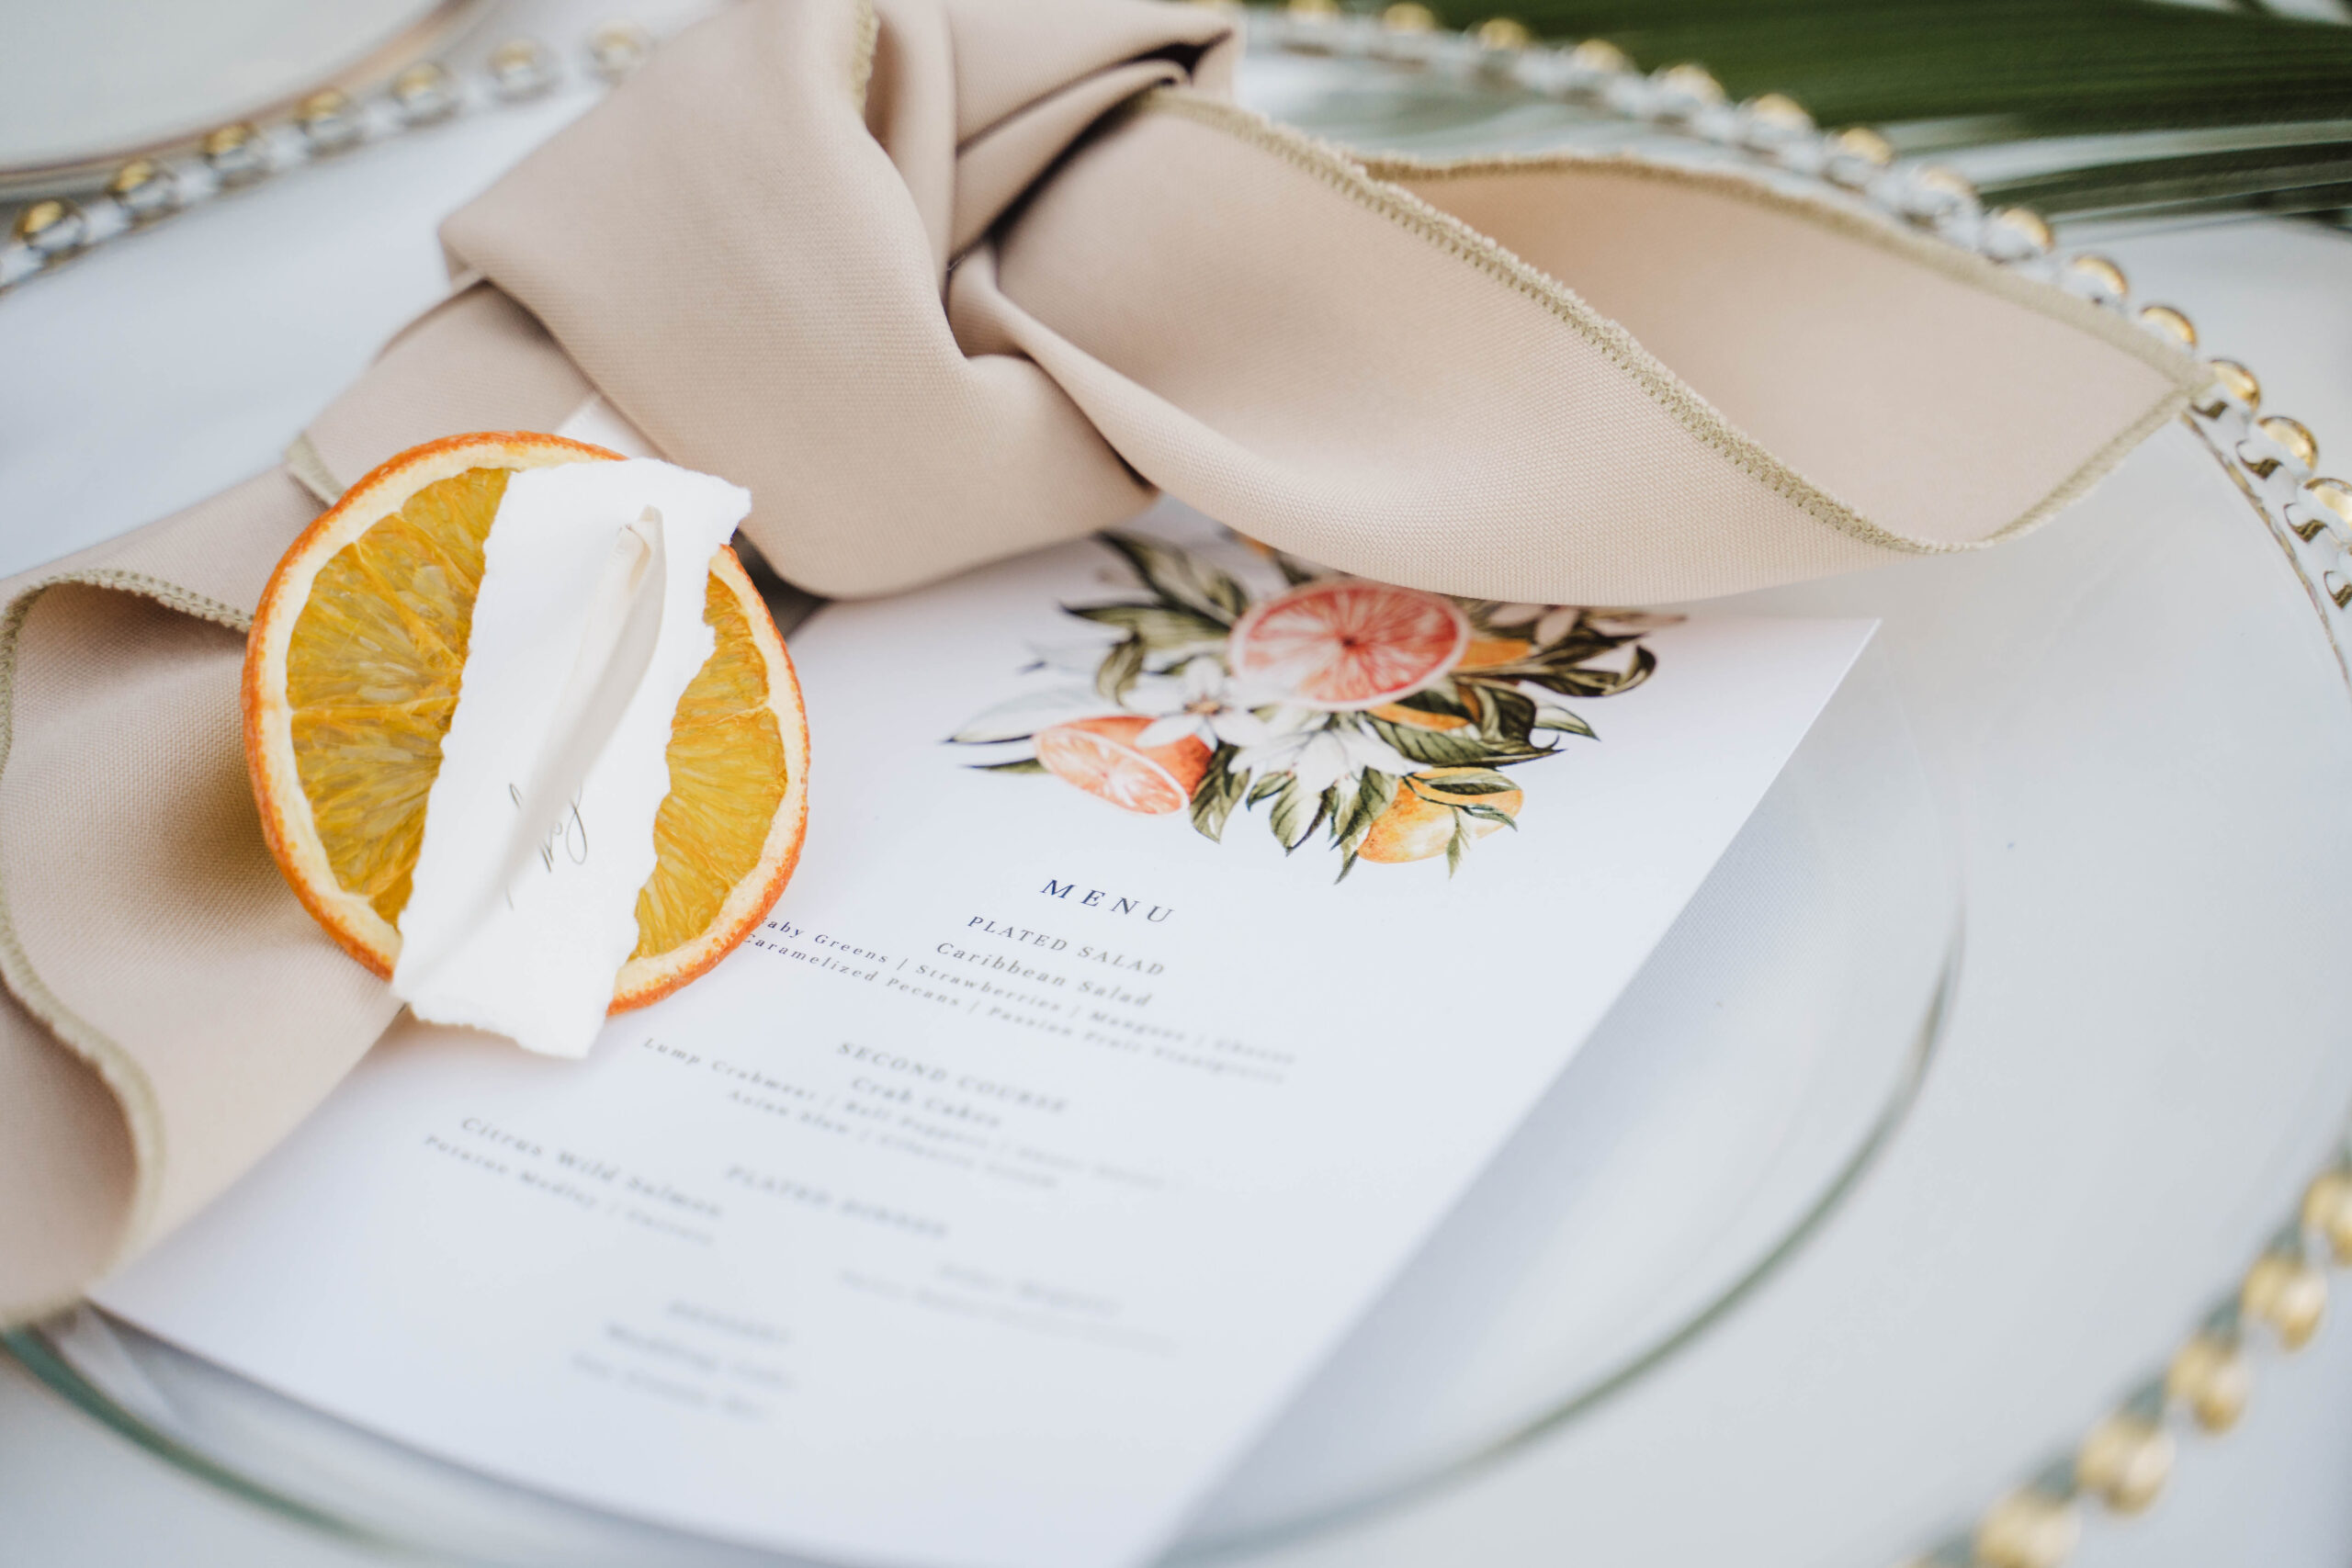 Florida Orange themed wedding menu